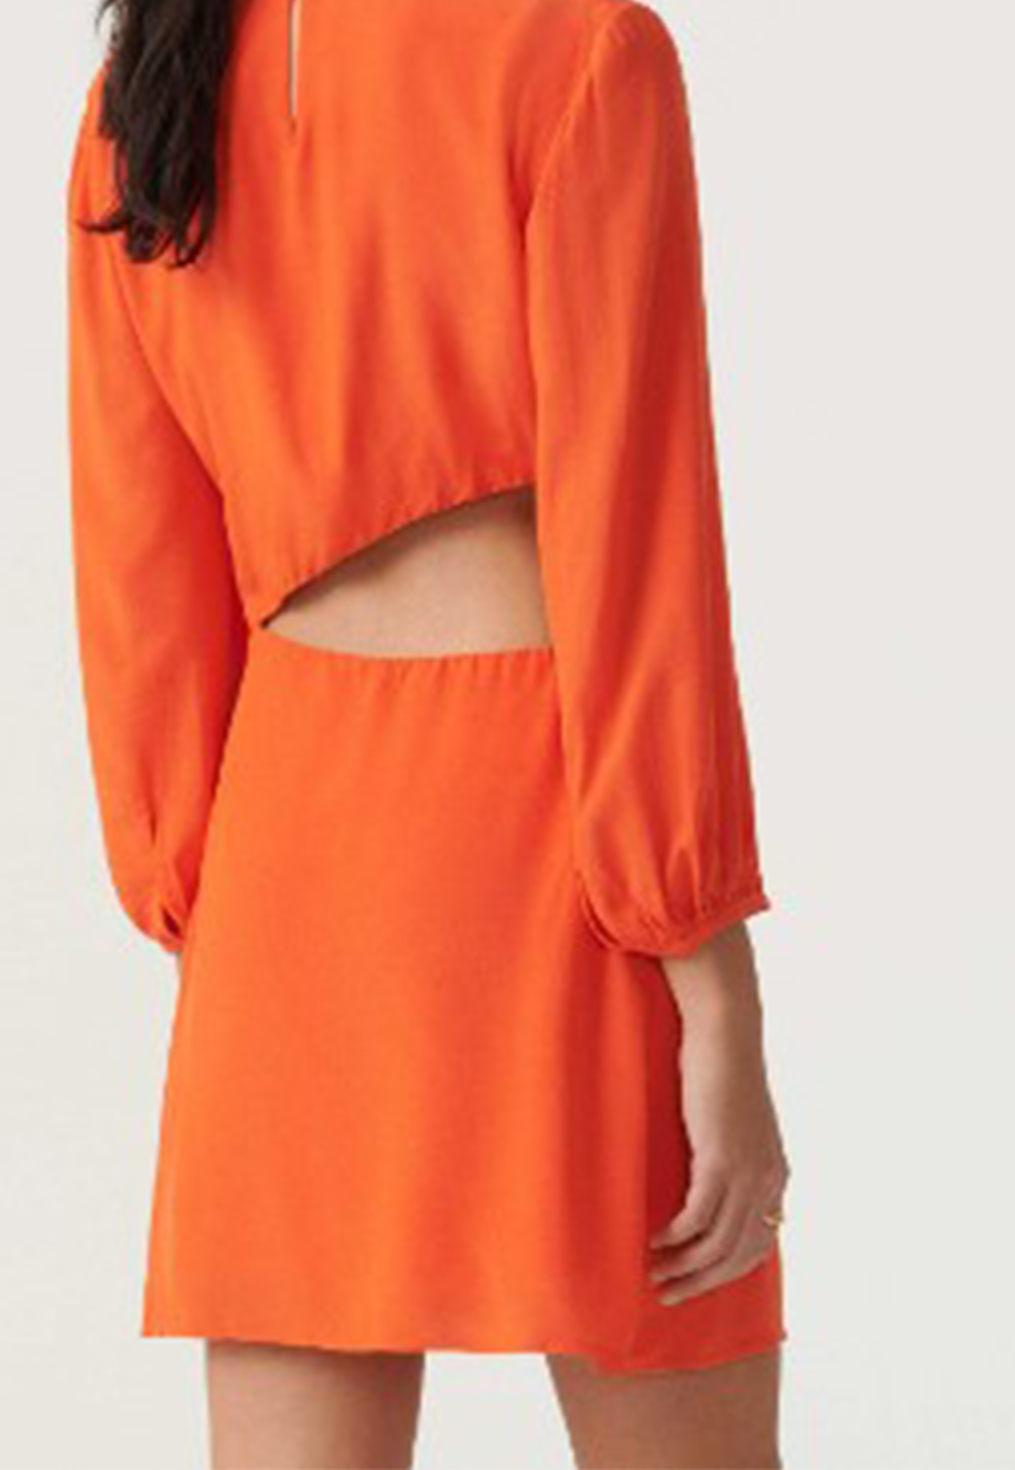 Gutsy Orange Dress